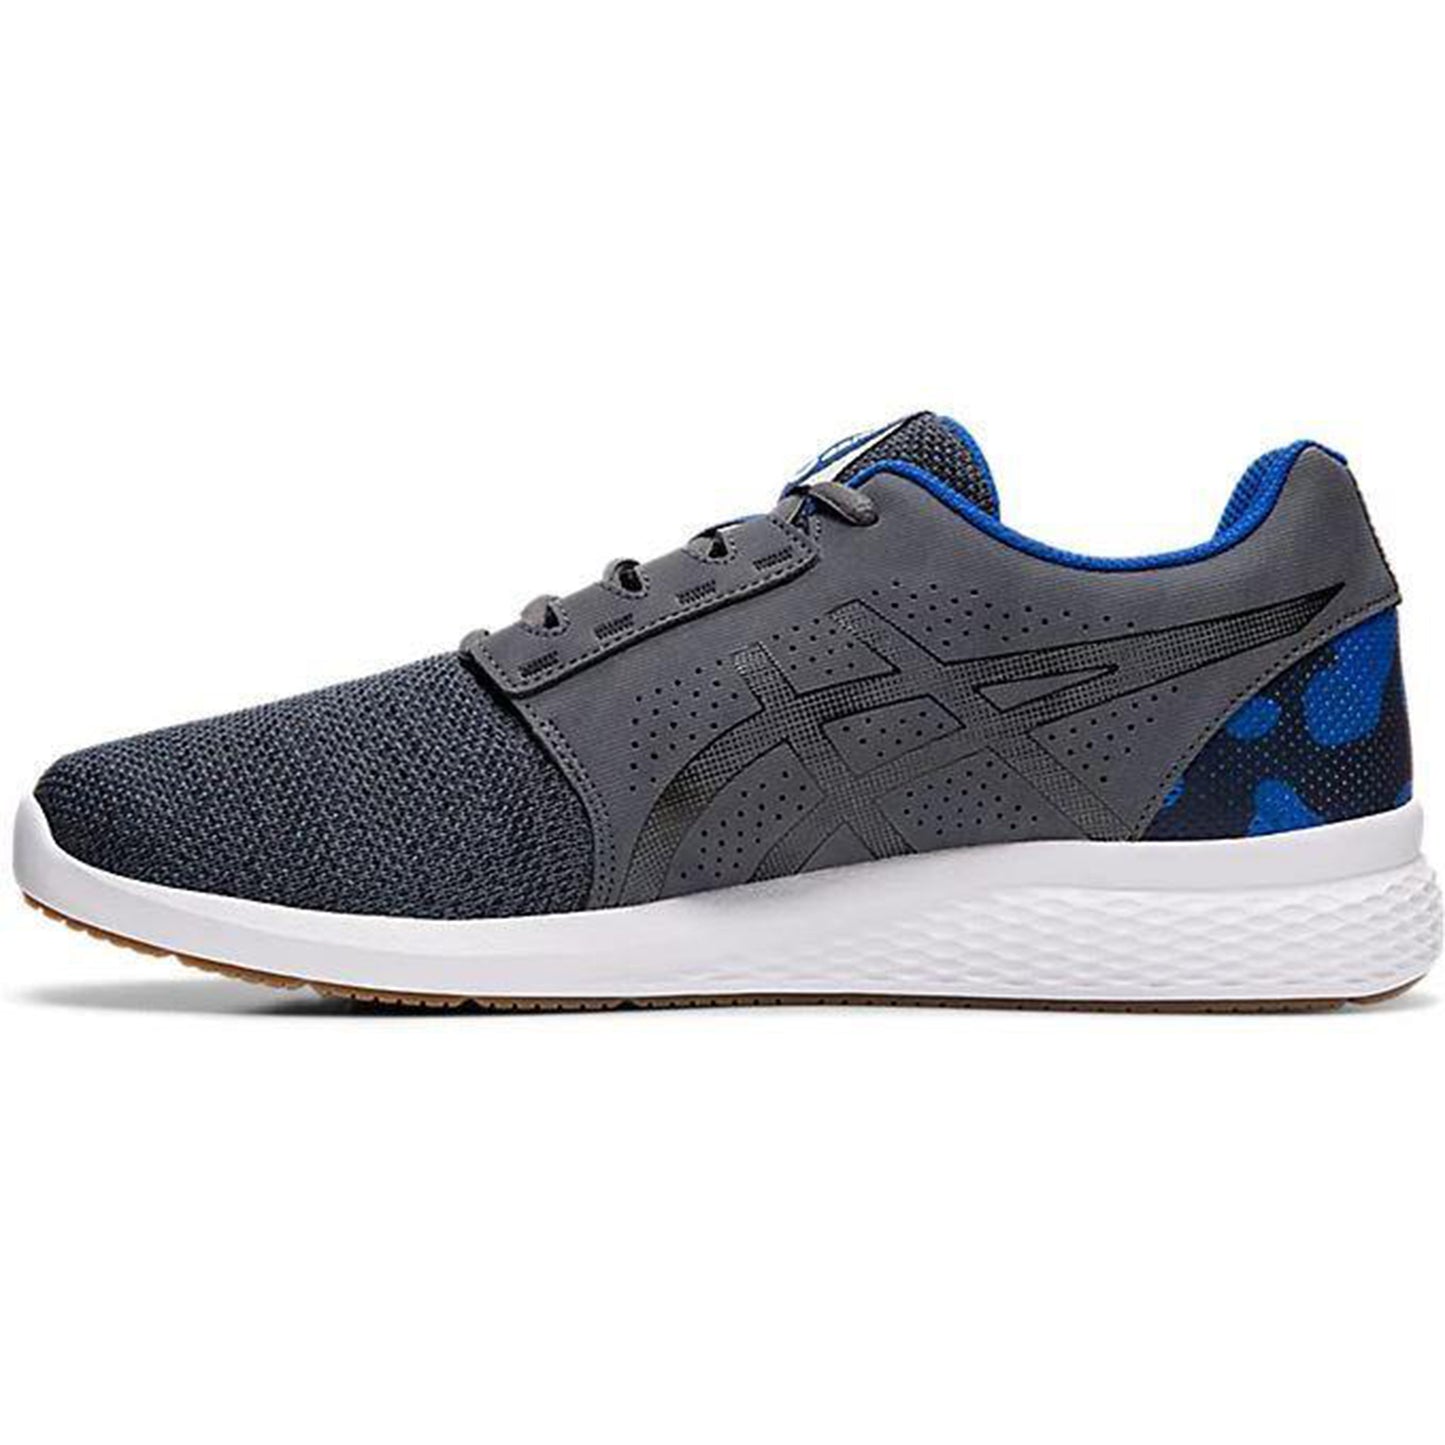 Asics Gel Torrance 2 Men's Running Shoes - Grey/Black - Best Price online Prokicksports.com